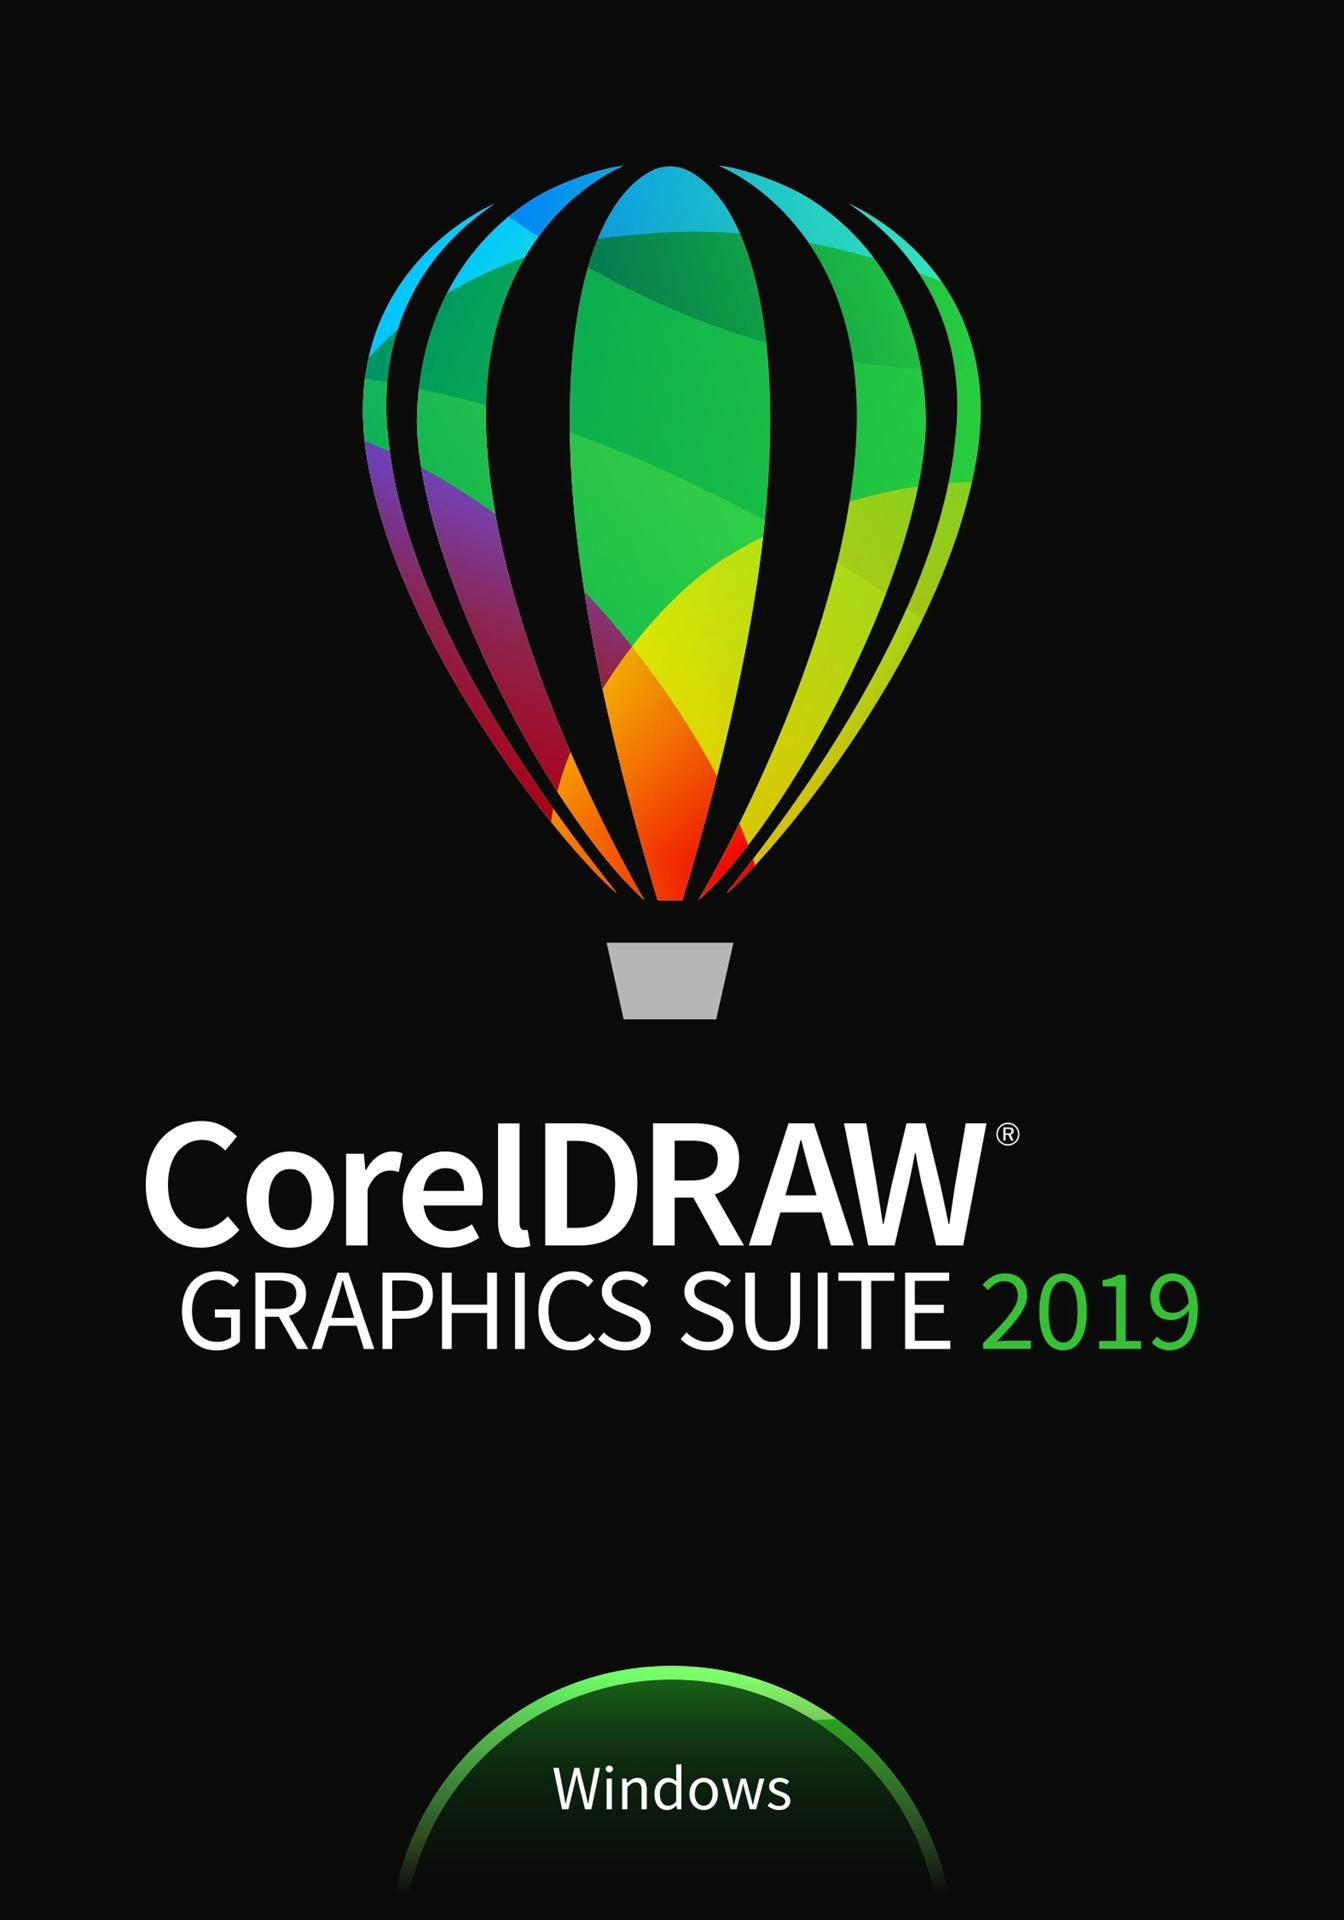 coreldraw graphics suite 2017 education edition